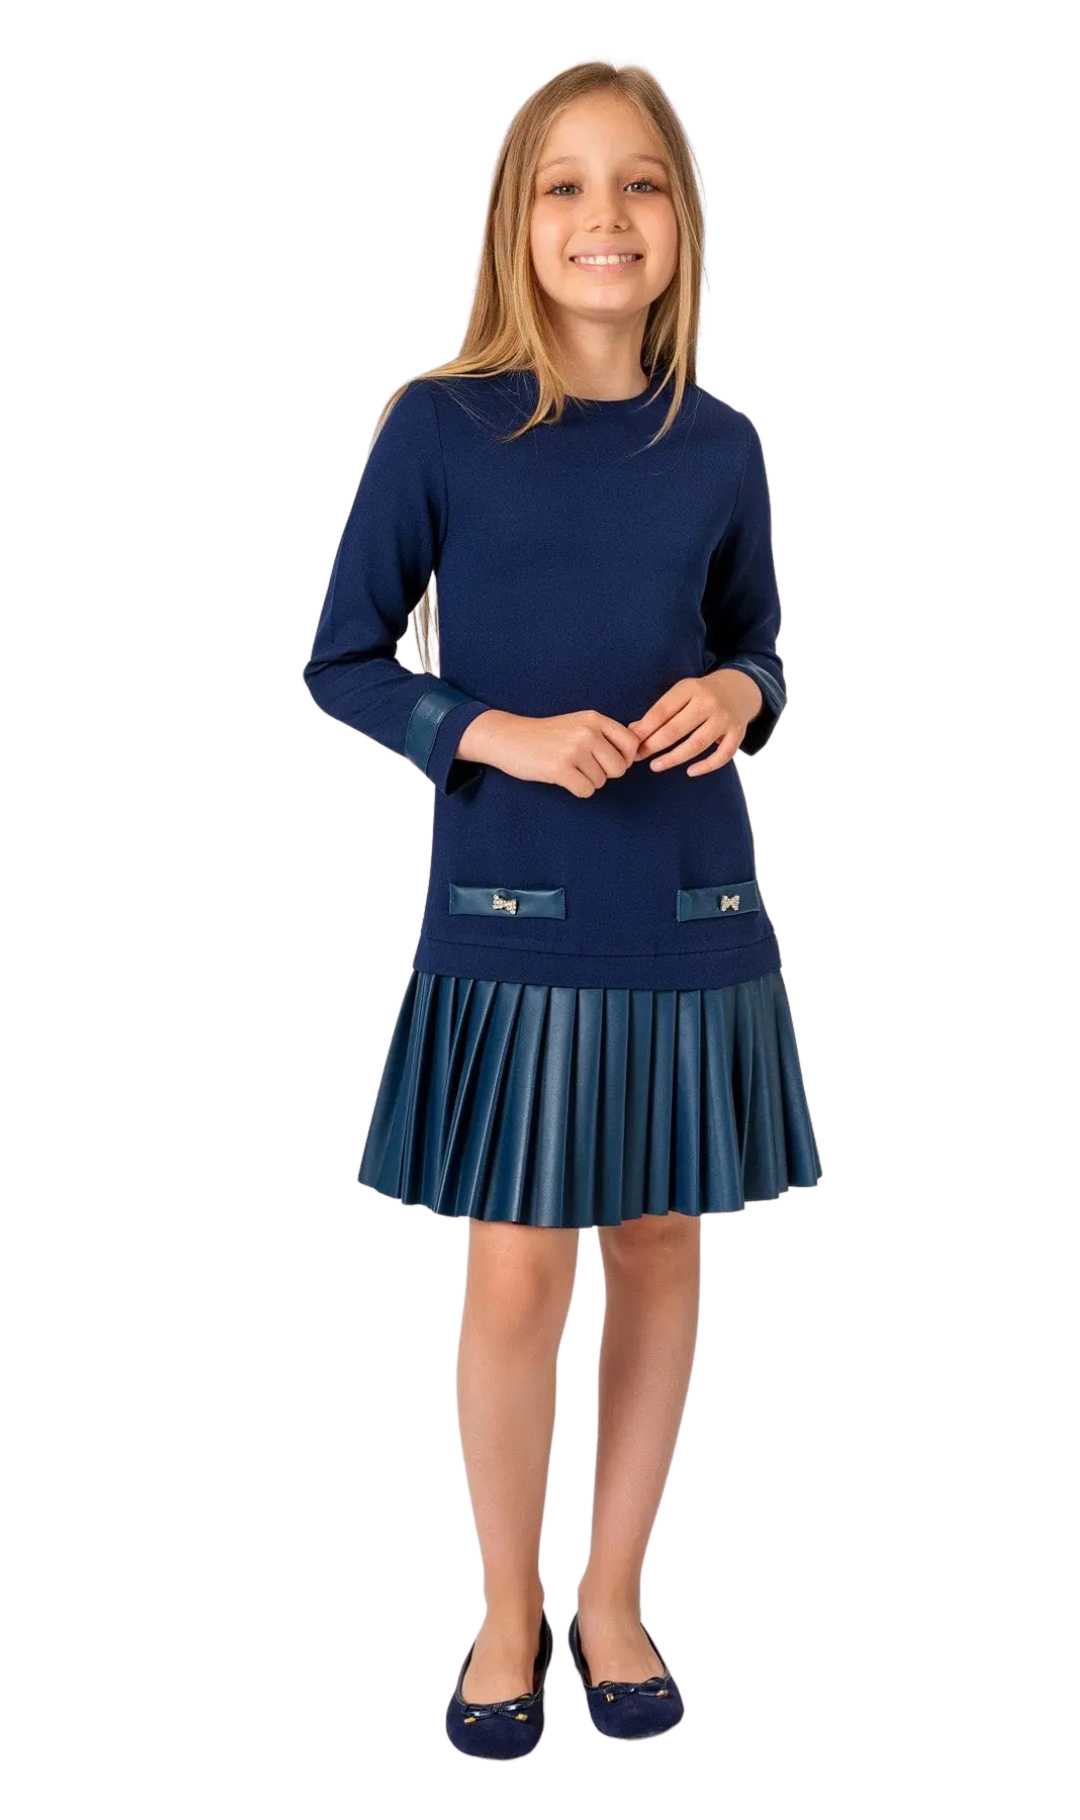 InCity Girls Tween 7-14 Years Navy Leather Skirt Long Sleeve Fashion Andover Dress InCity Boys Girls